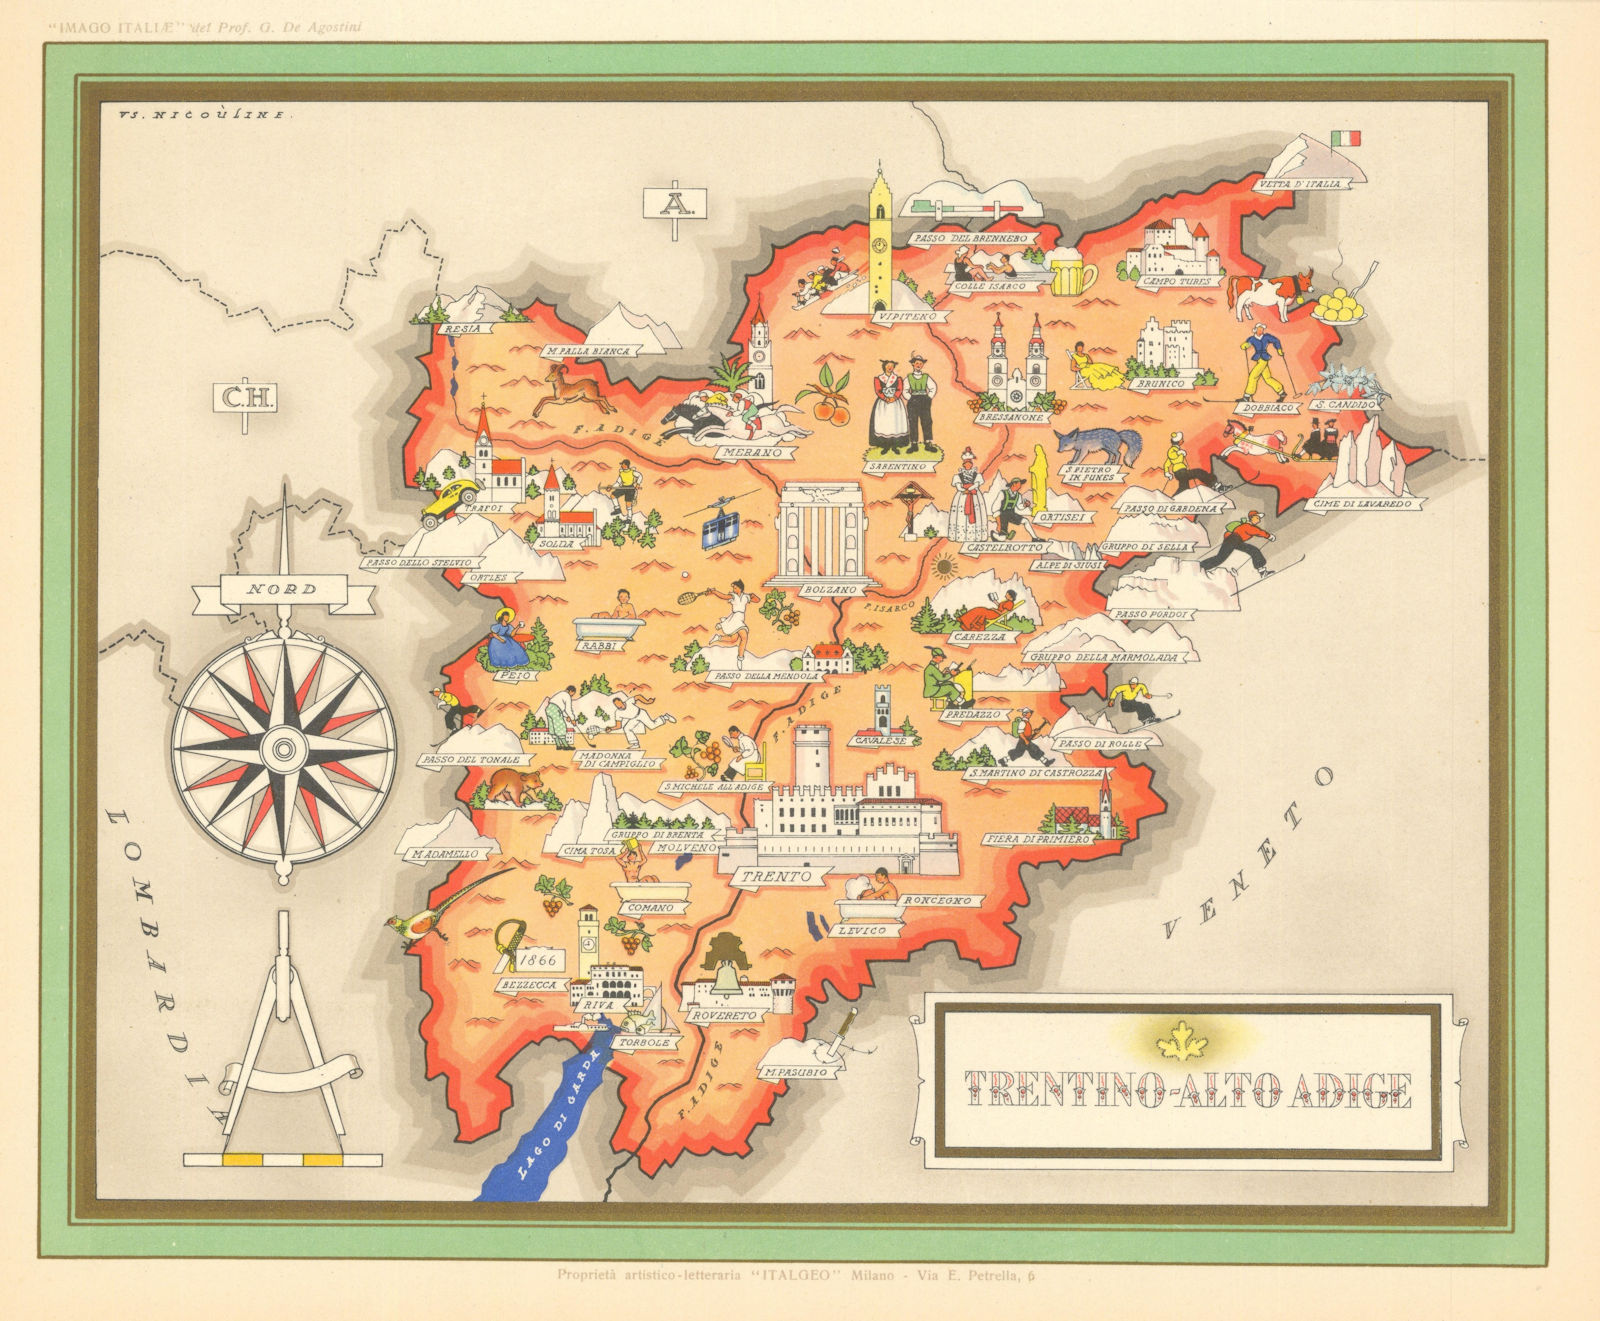 Trentino-Alto Adige / South Tyrol pictorial map by V. Nicouline. Italgeo c1950